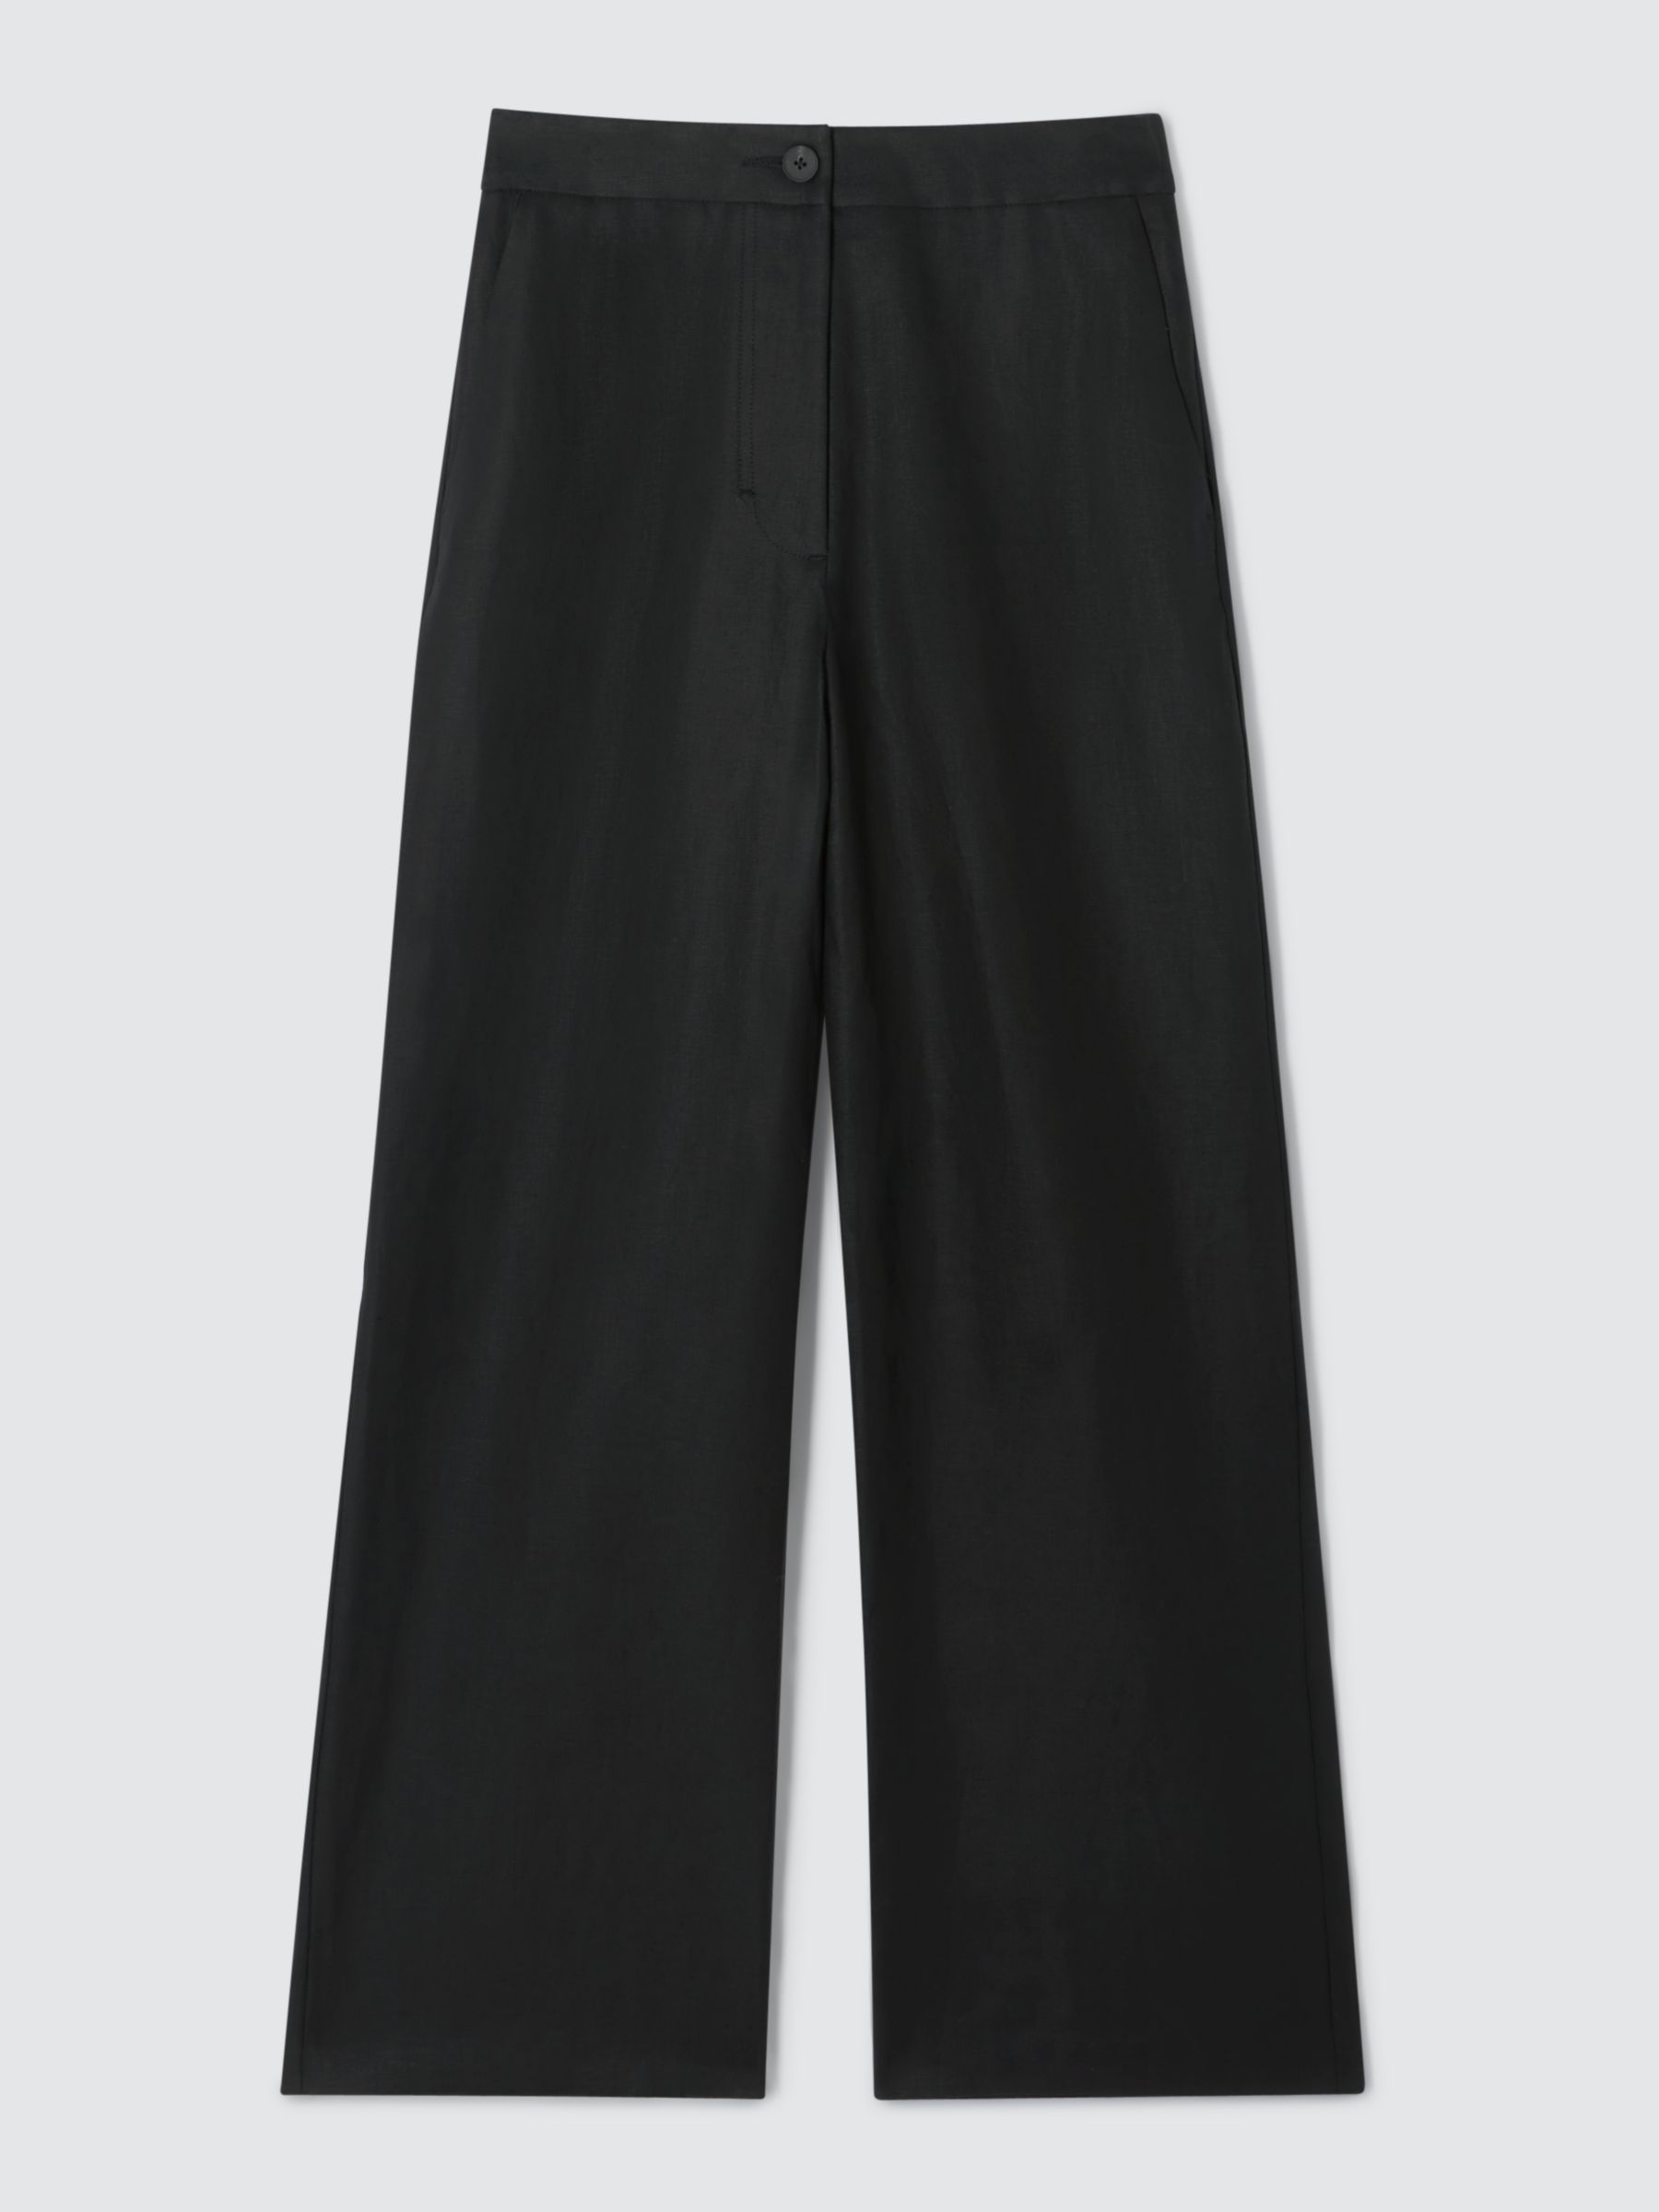 John Lewis Straight Fit Linen Trousers, Black at John Lewis & Partners